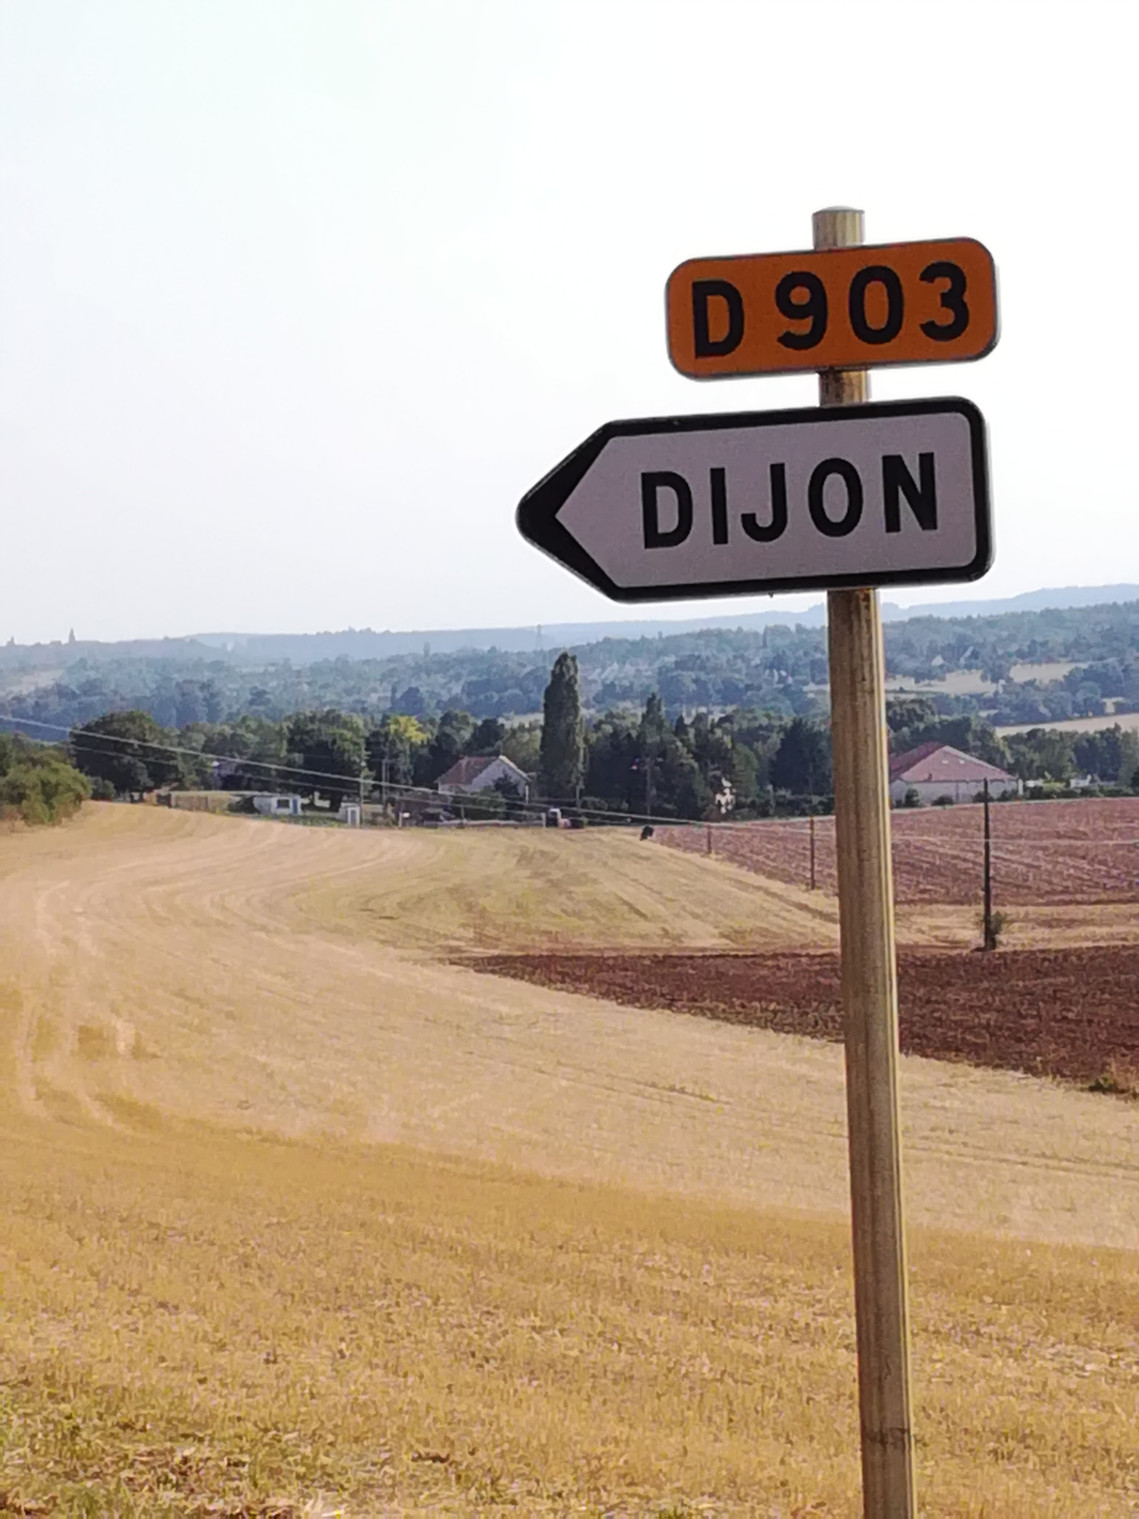 D903 - Dijon